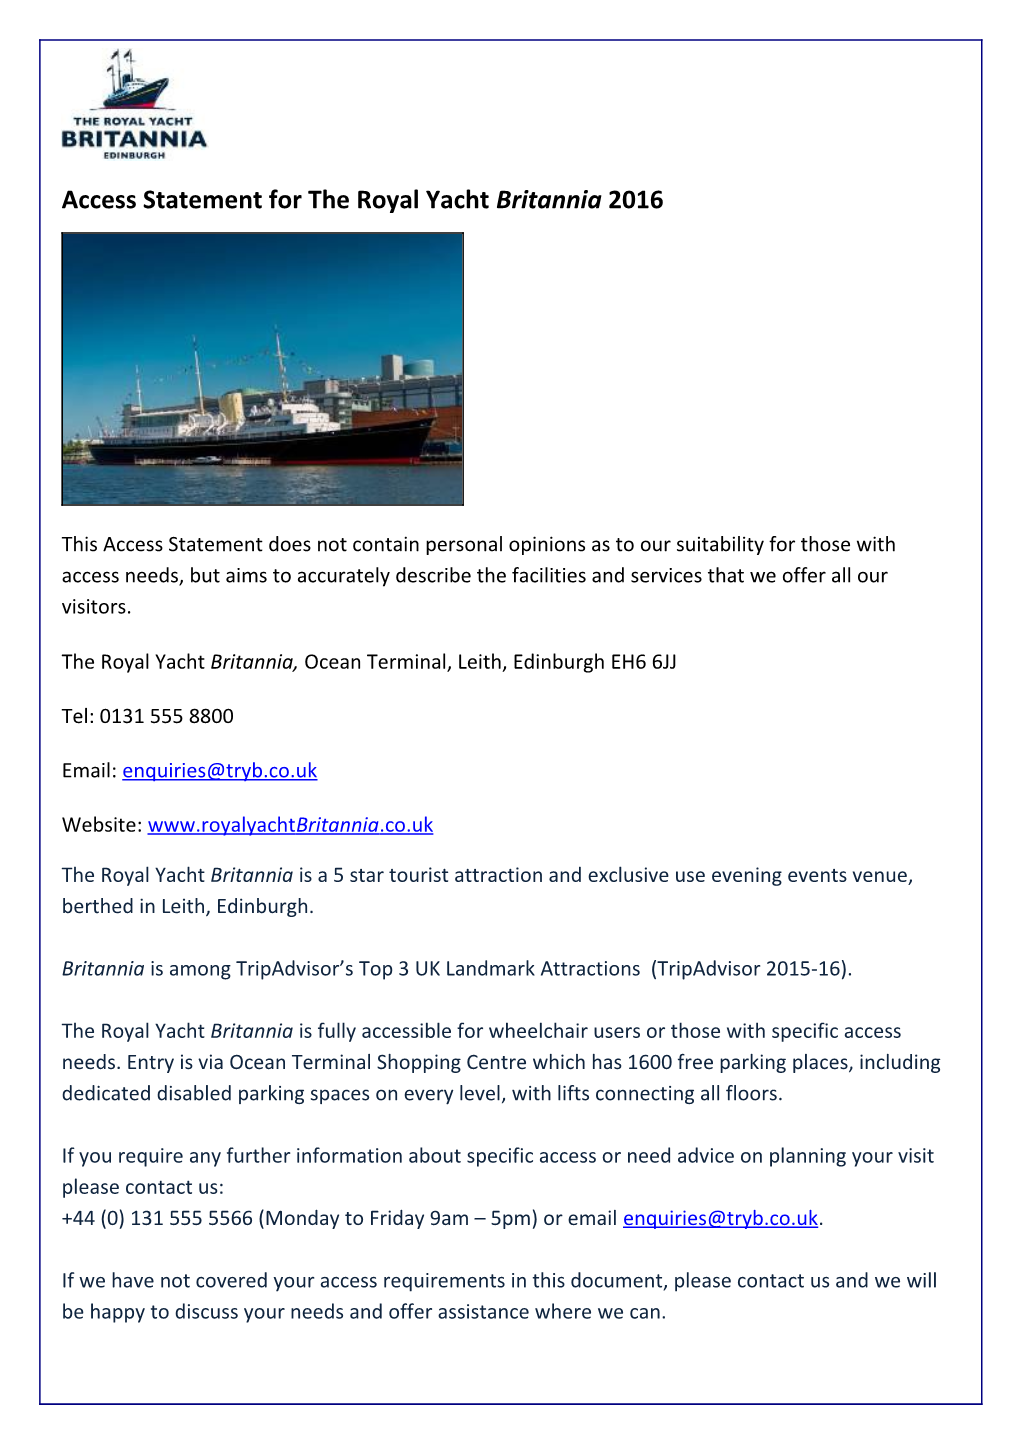 The Royal Yacht Britannia Access Statement